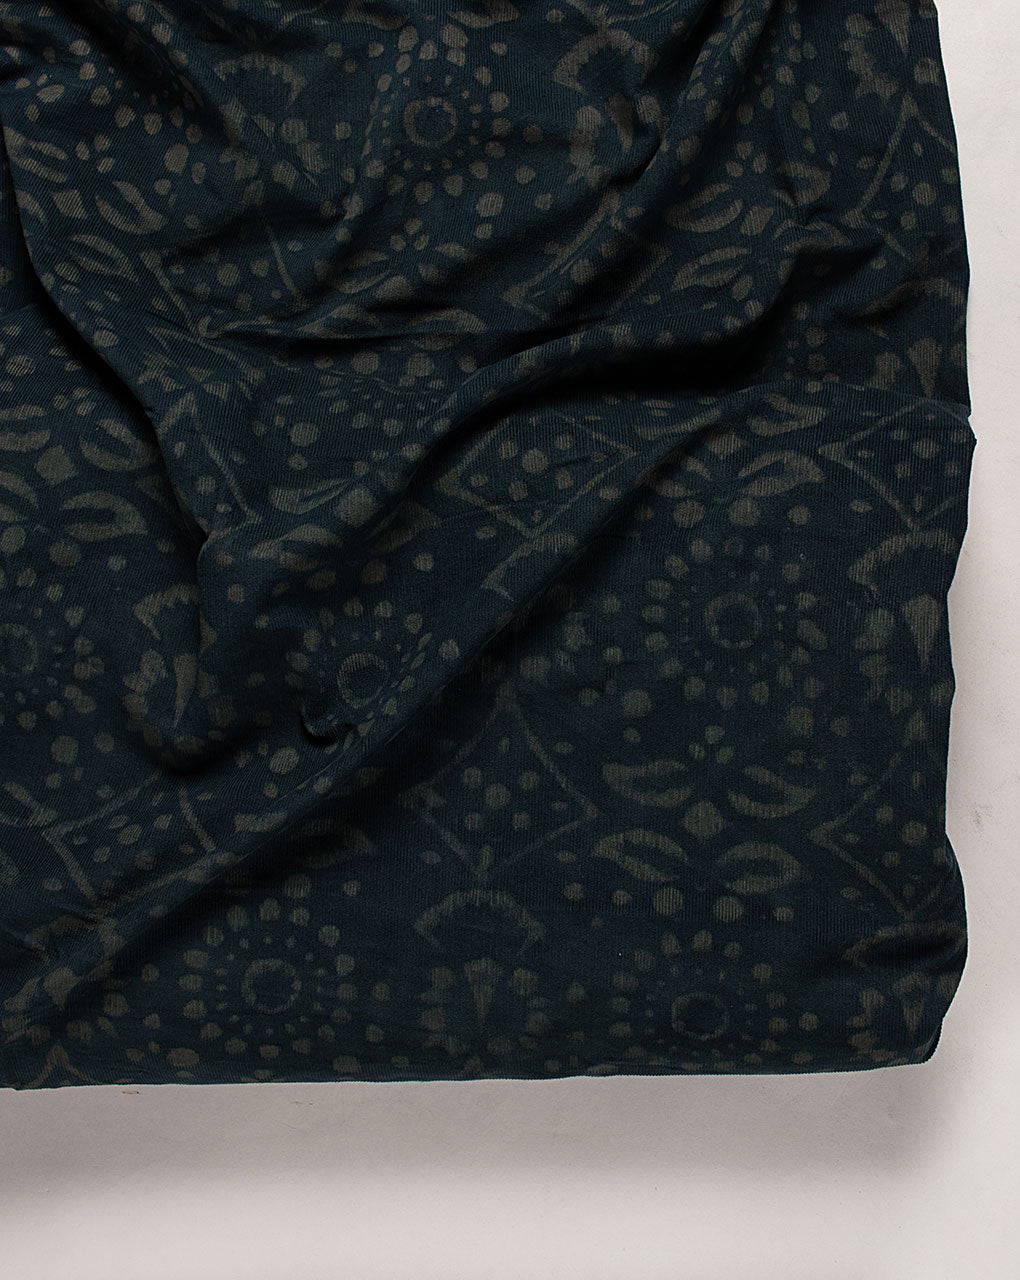 Corduroy Fabric - Buy Plain & Printed Corduroy Fabric @ Best Price